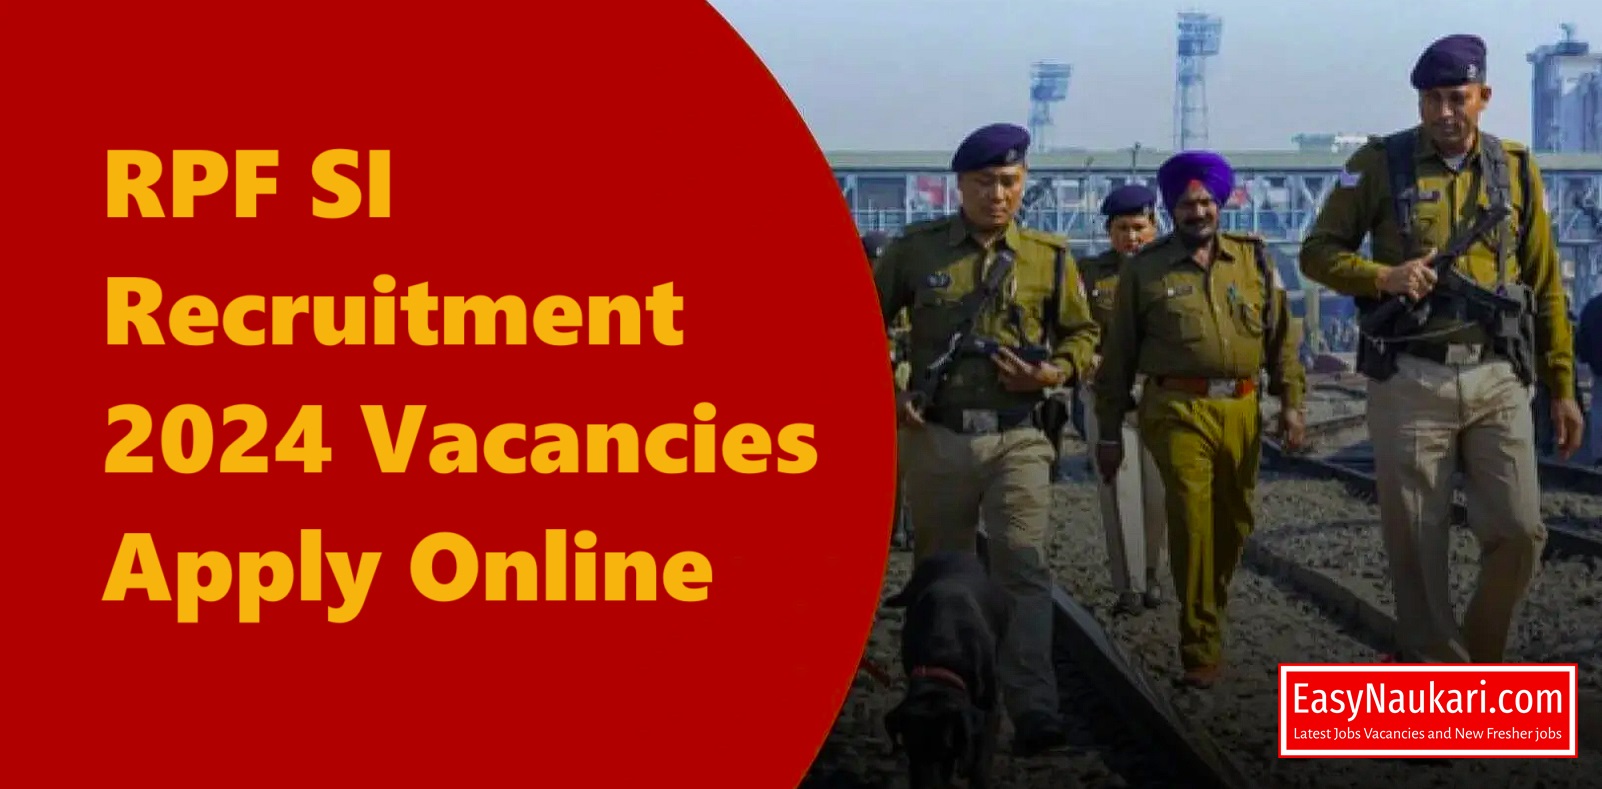 Rpf Si Recruitment 2024 Vacancies Apply Online